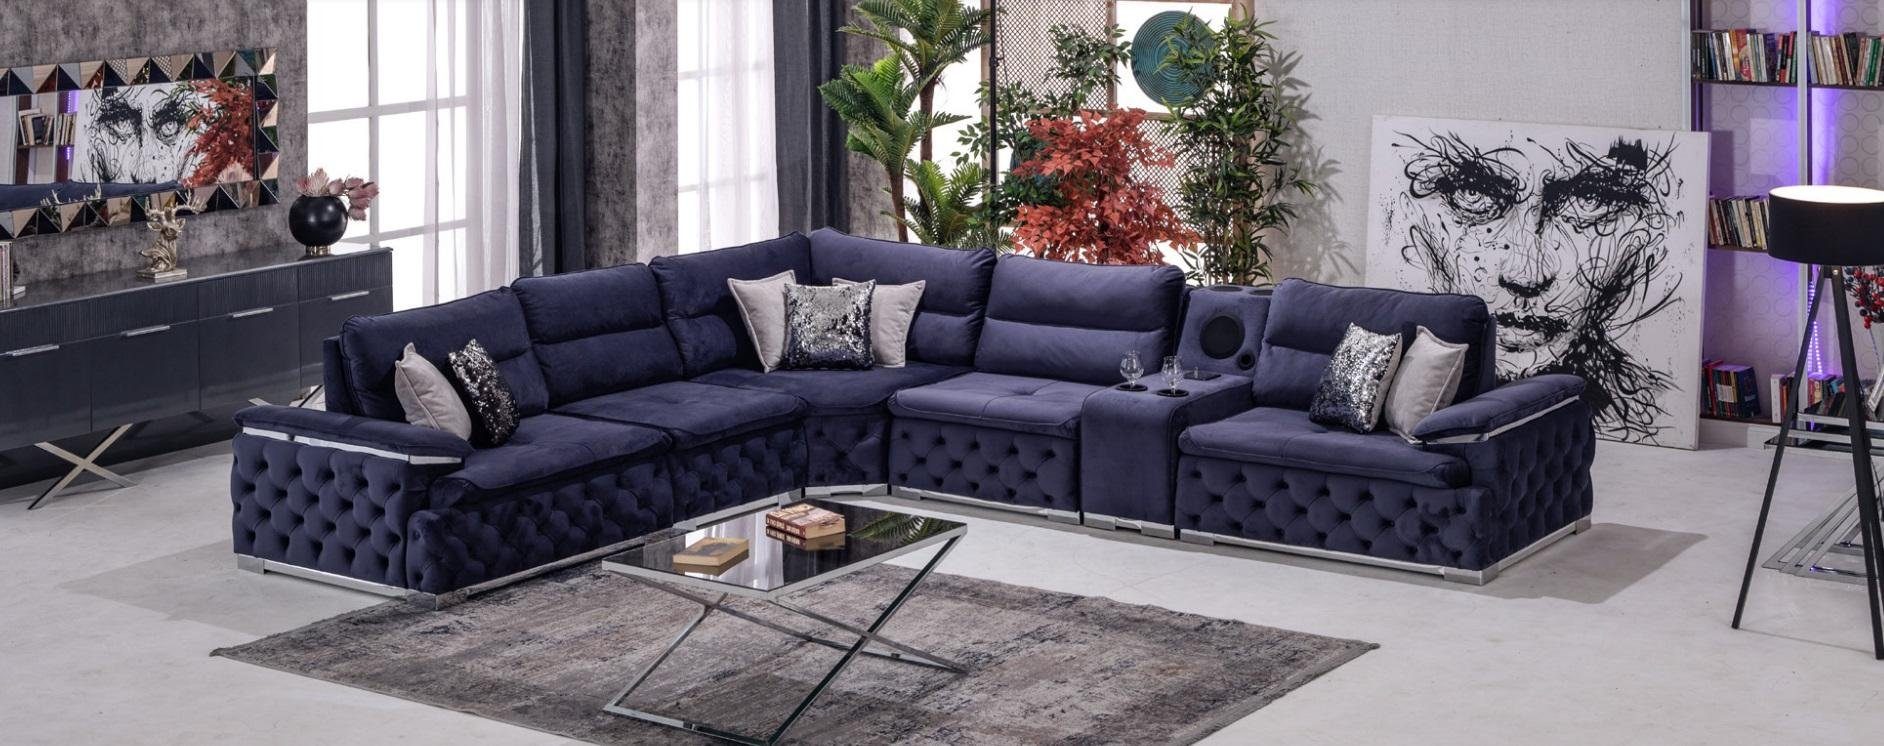 JVmoebel Ecksofa Ecksofa L Form Couch Chesterfield Möbel Sofa Design Möbel,  Maße: L-Form 325 x 365 x 85 cm